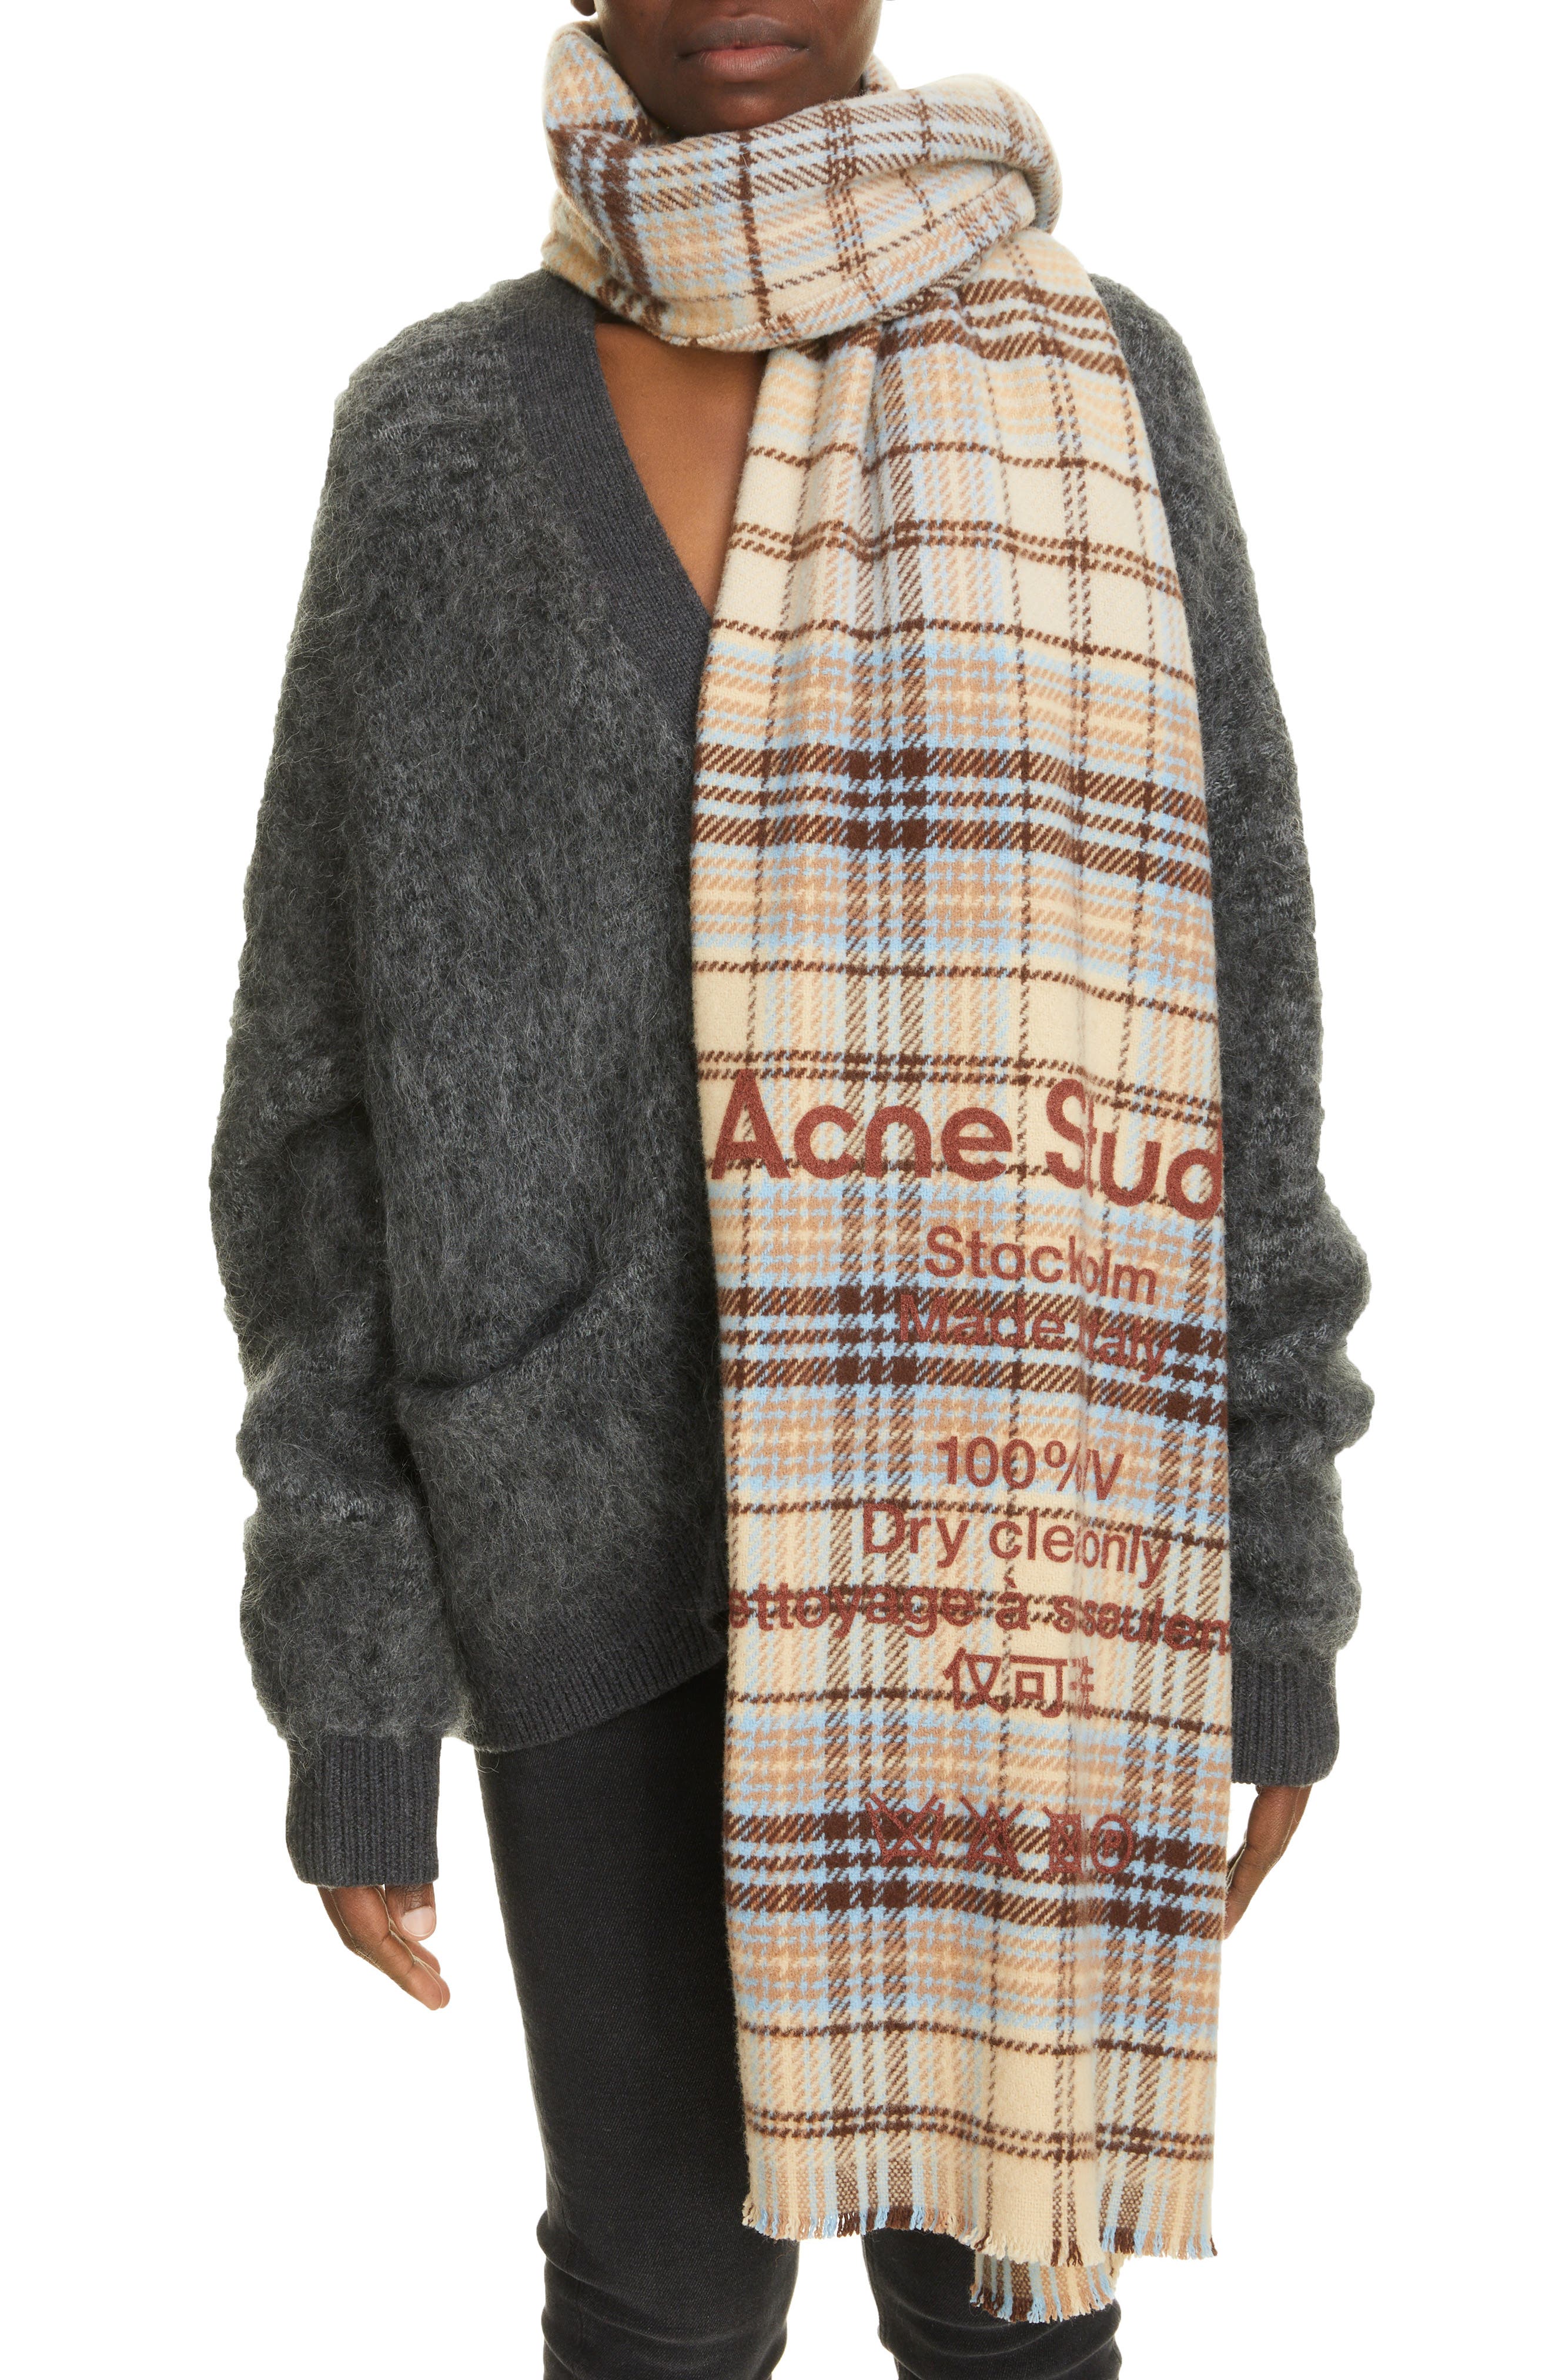 Acne Studios Check Wool Scarf in Oat Beige/Brown at Nordstrom